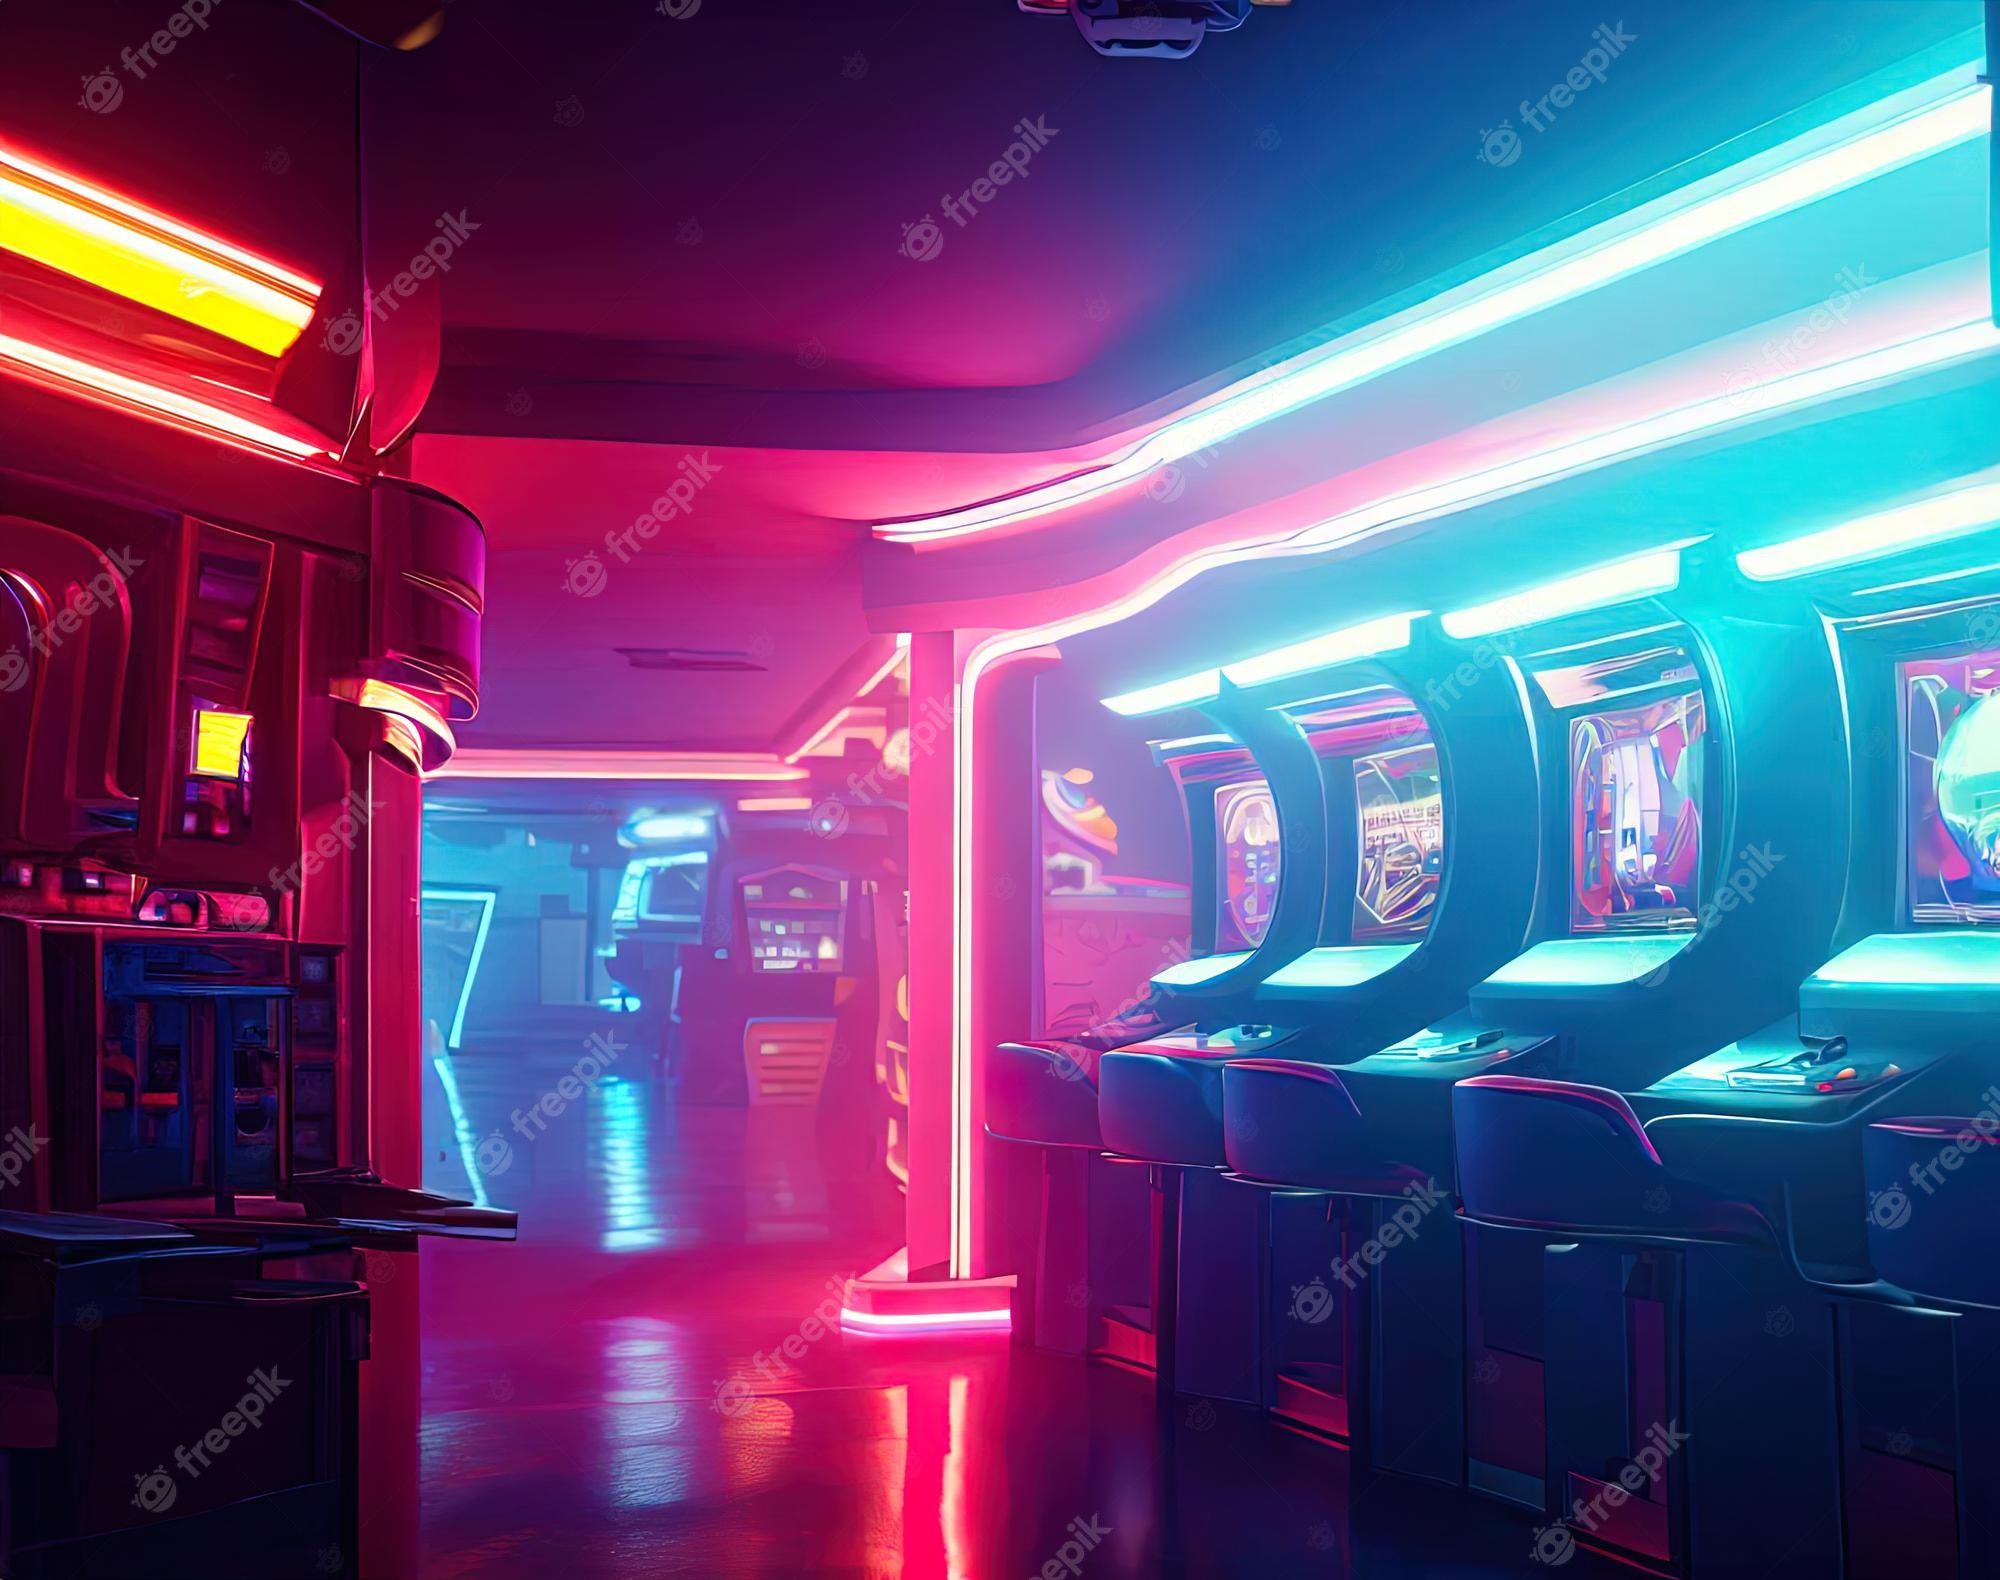 Arcade Club Image